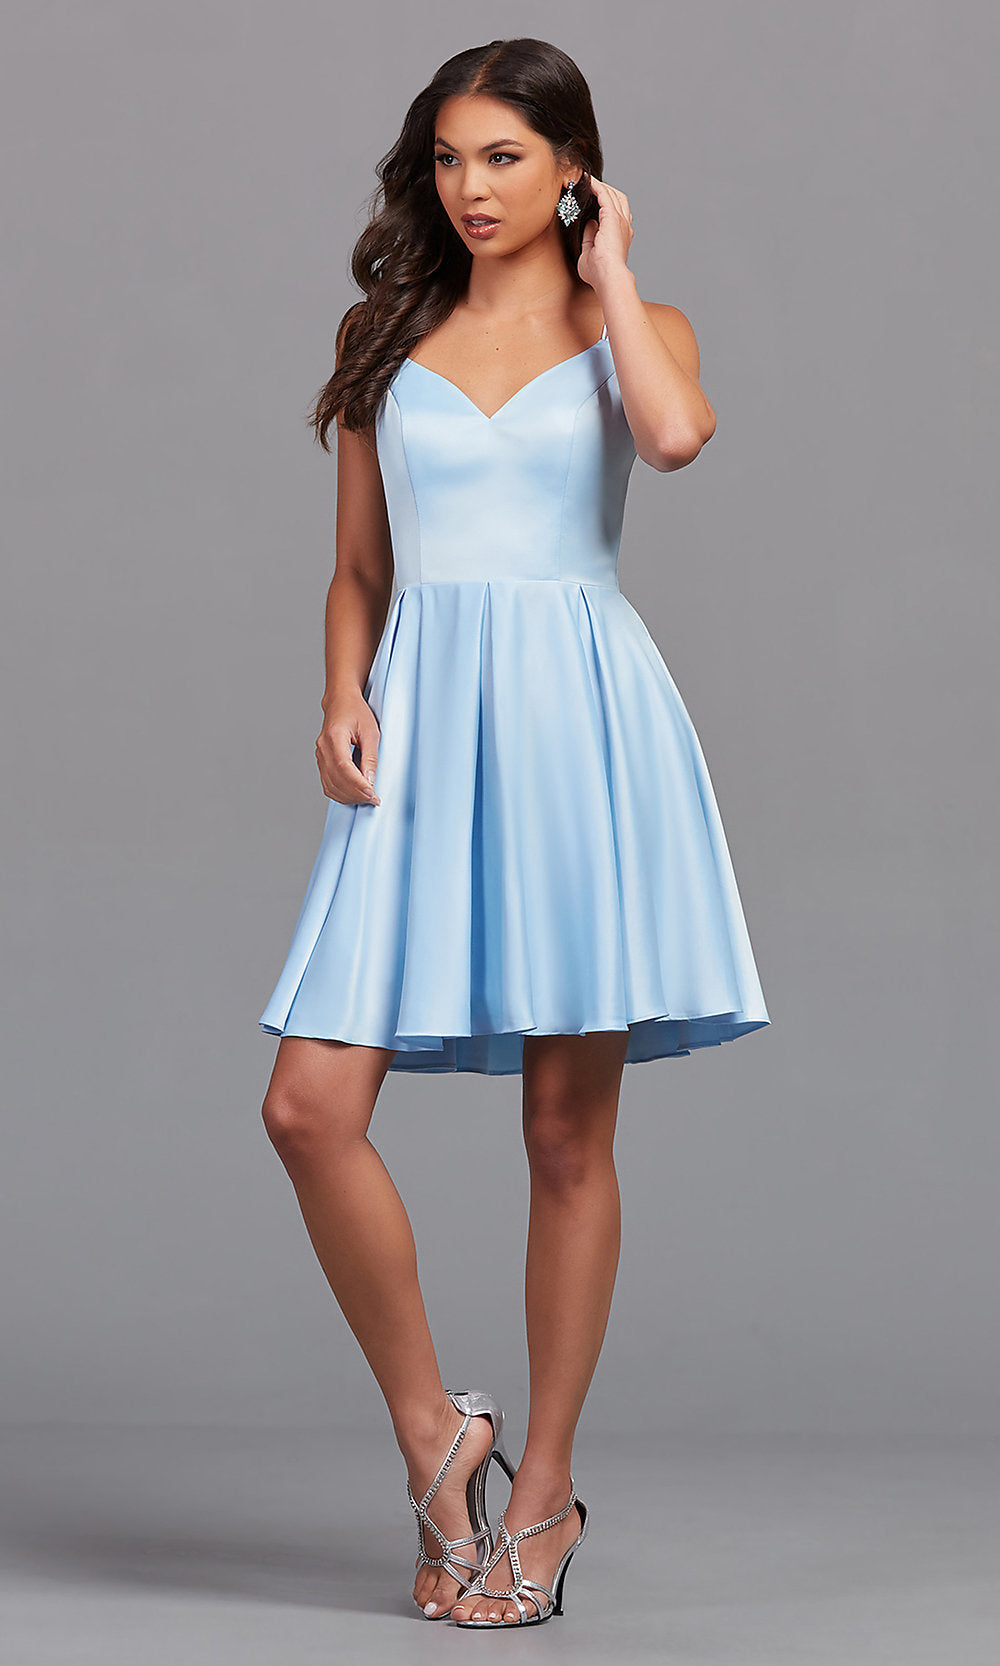 Knee Length Light Blue Homecoming Dress with Pocket